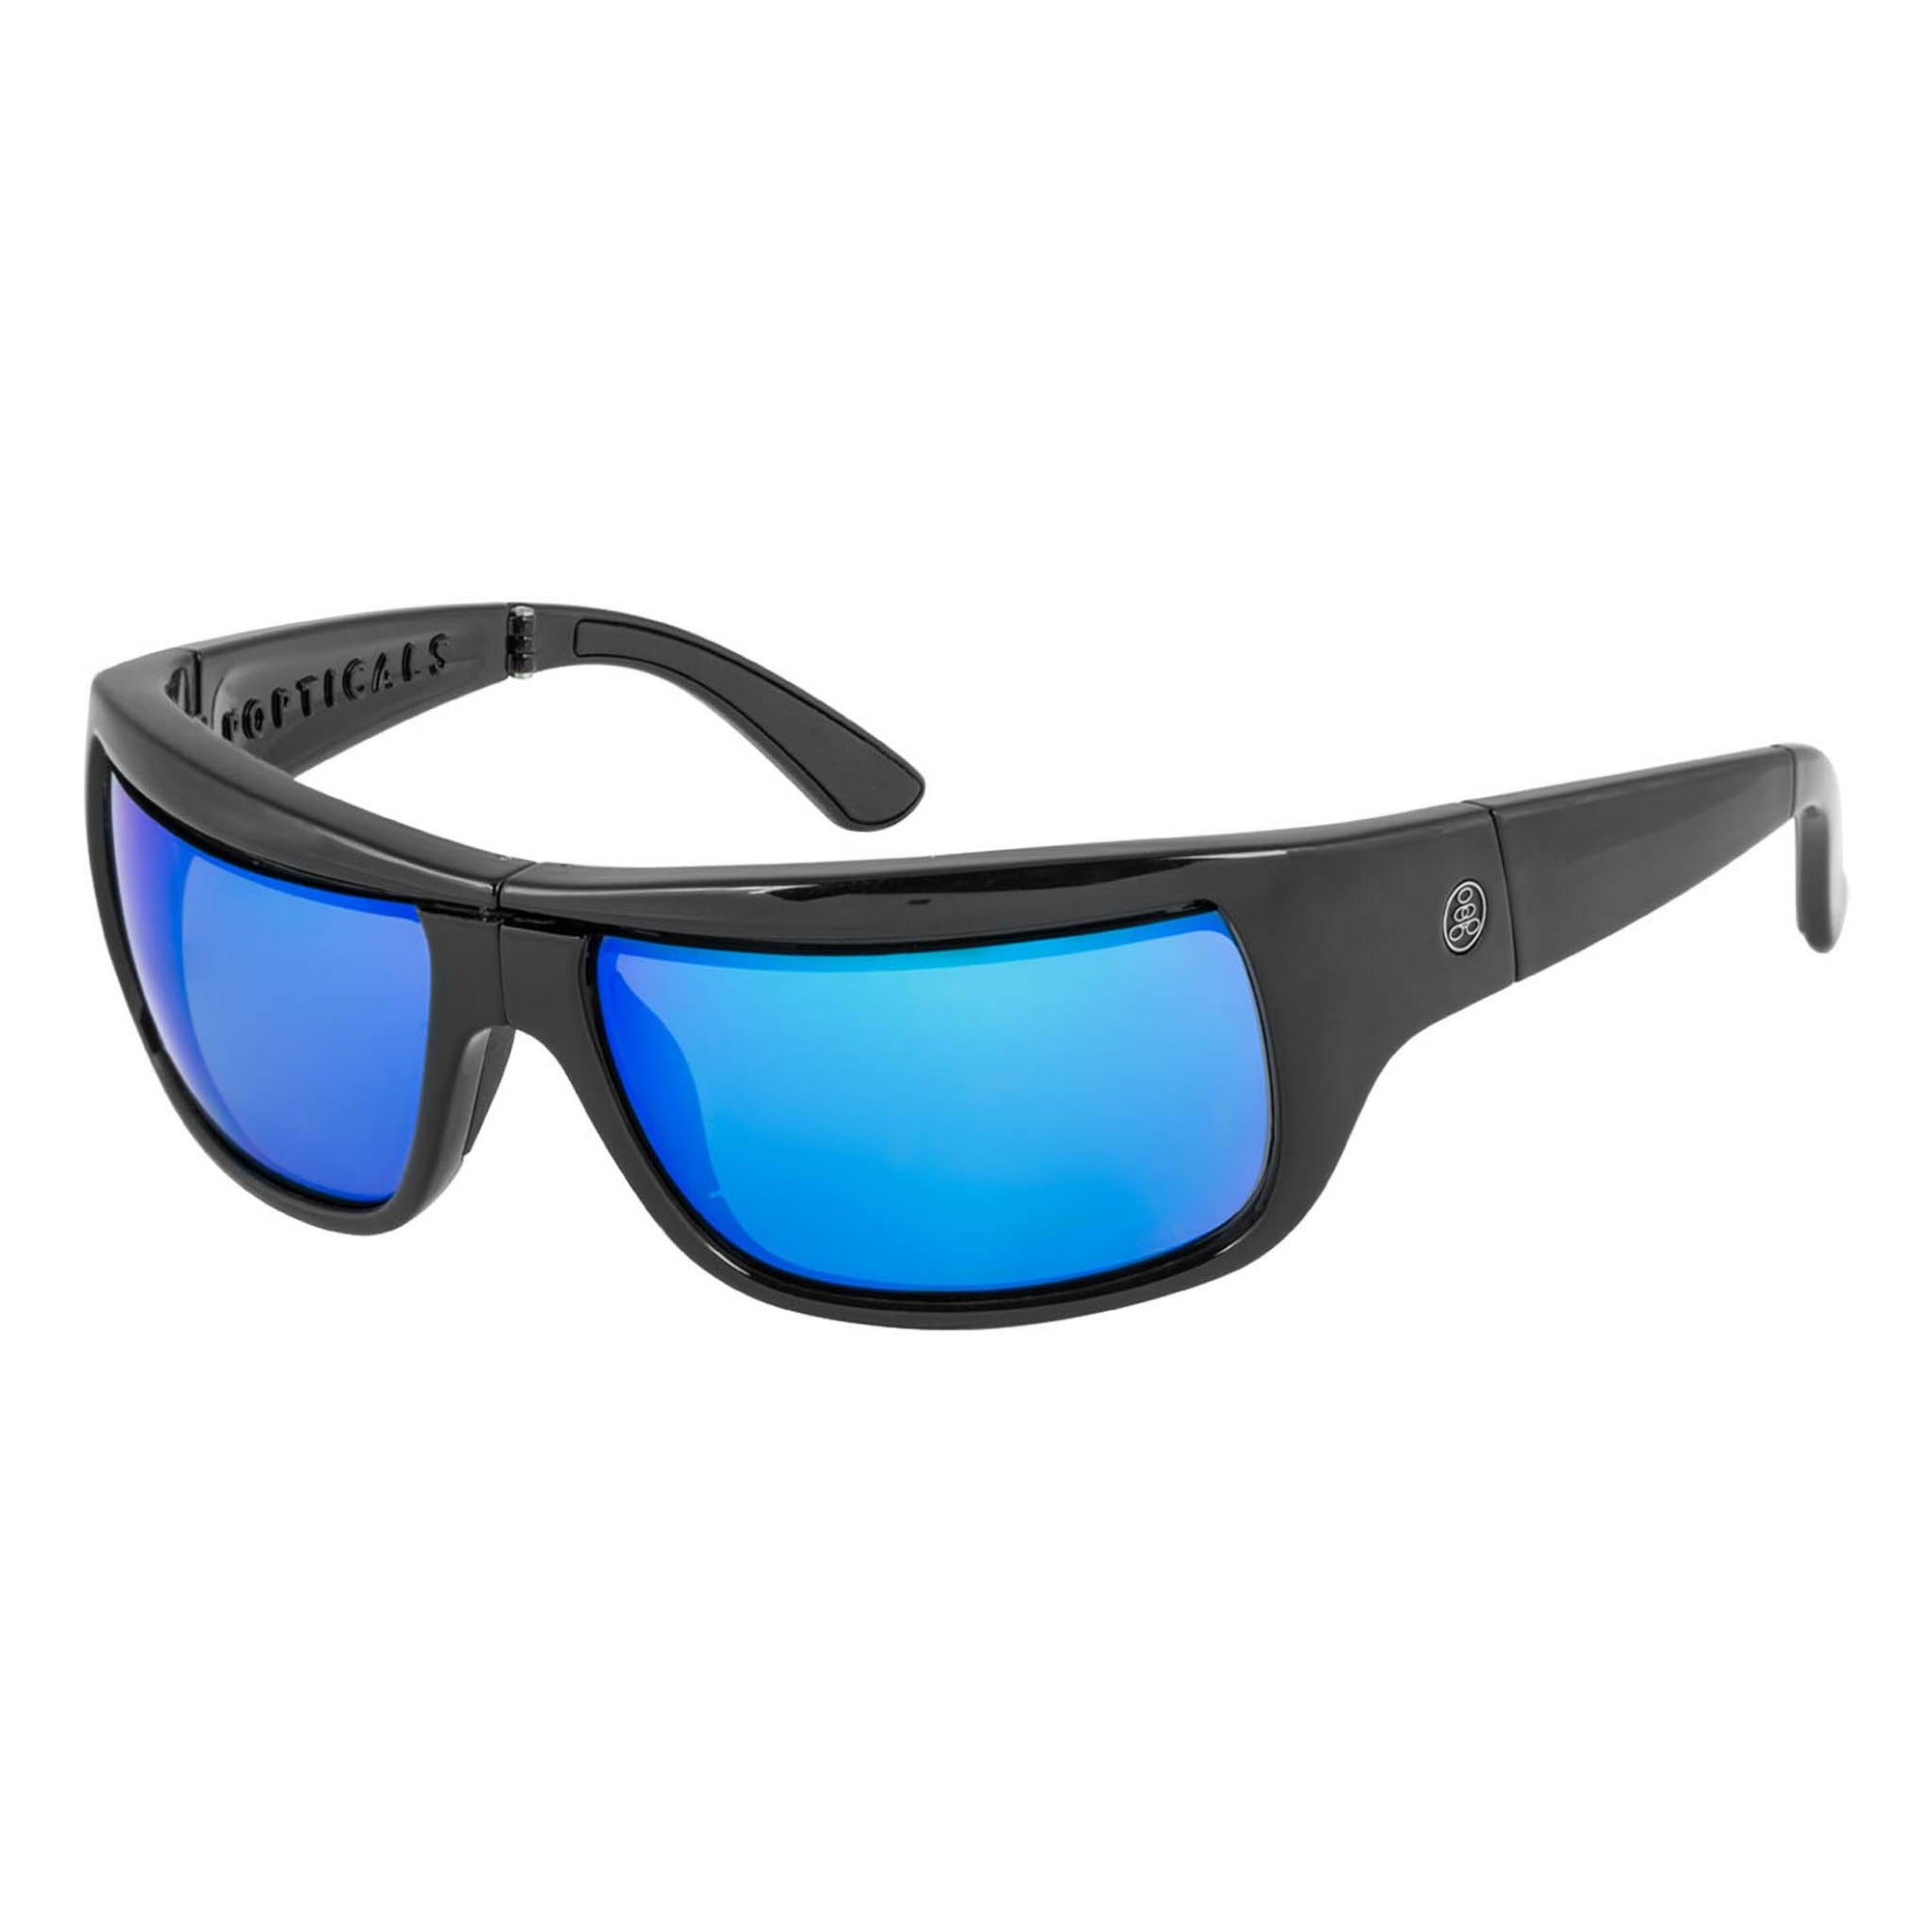 Popticals, Premium Compact Sunglasses, PopH2O, 010070-BGUN, Polarized Sunglasses, Gloss Black Frame, Gray Lenses w/Blue Mirror Finish, Glam View